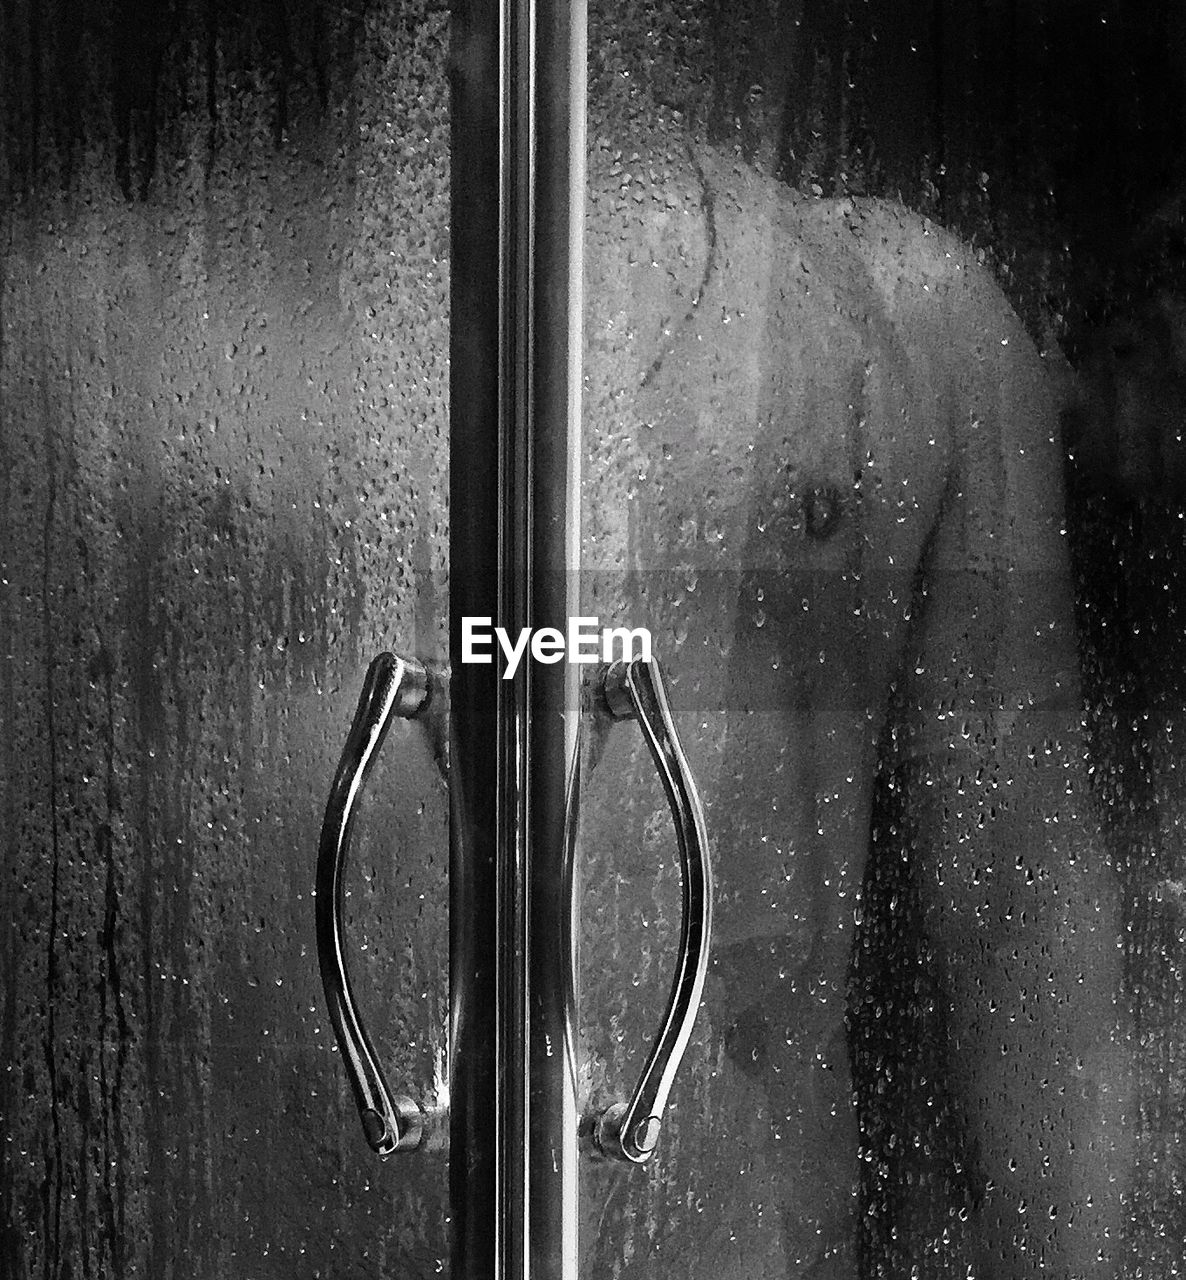 Midsection of shirtless man seen through wet glass door